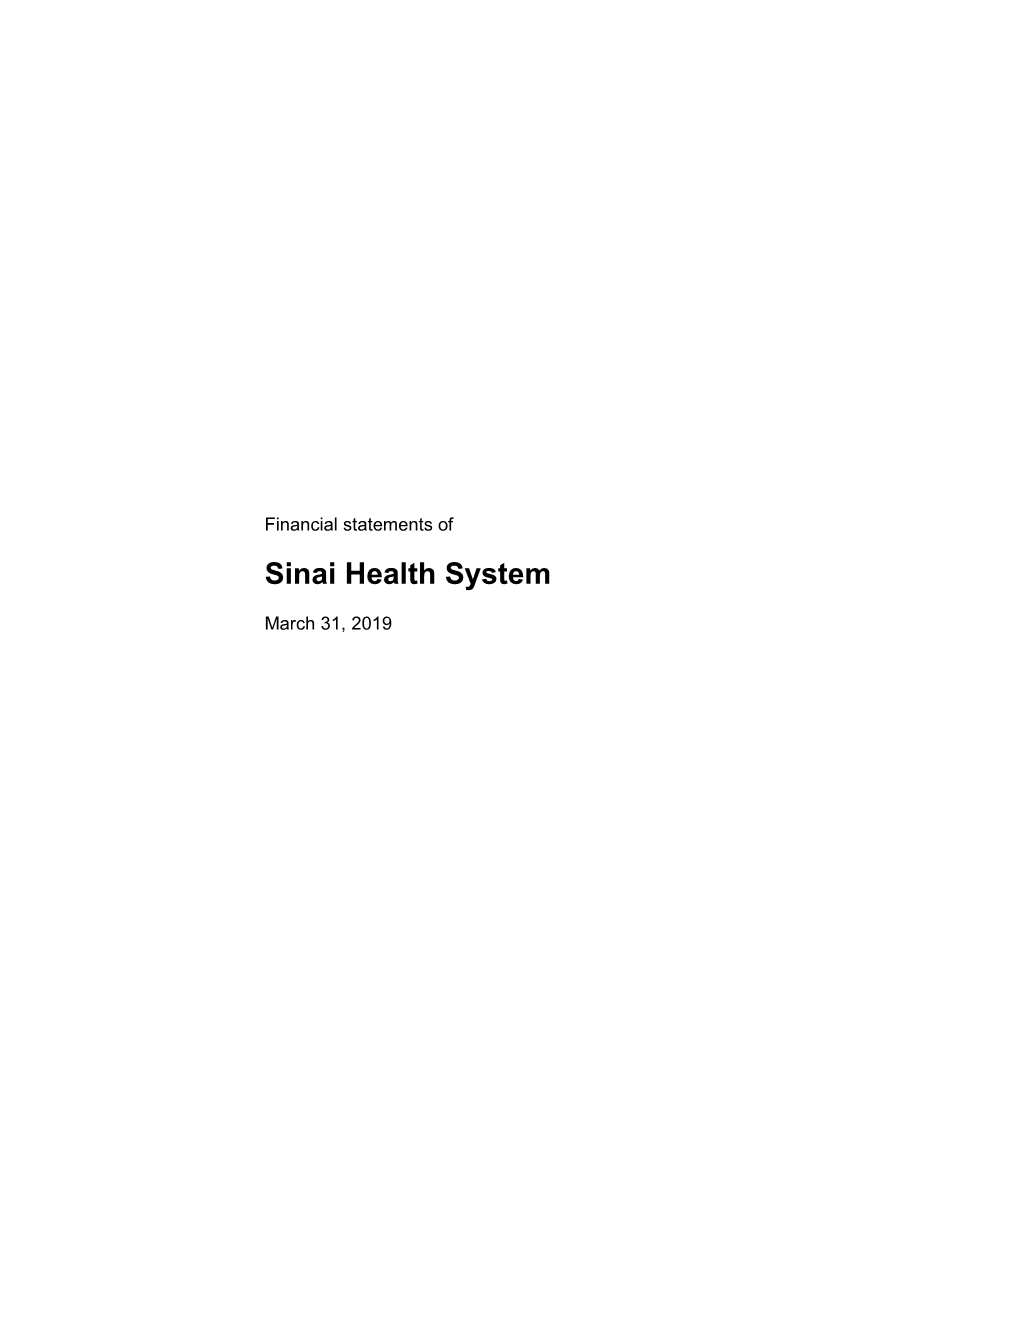 Sinai-Health-System-2019.Pdf